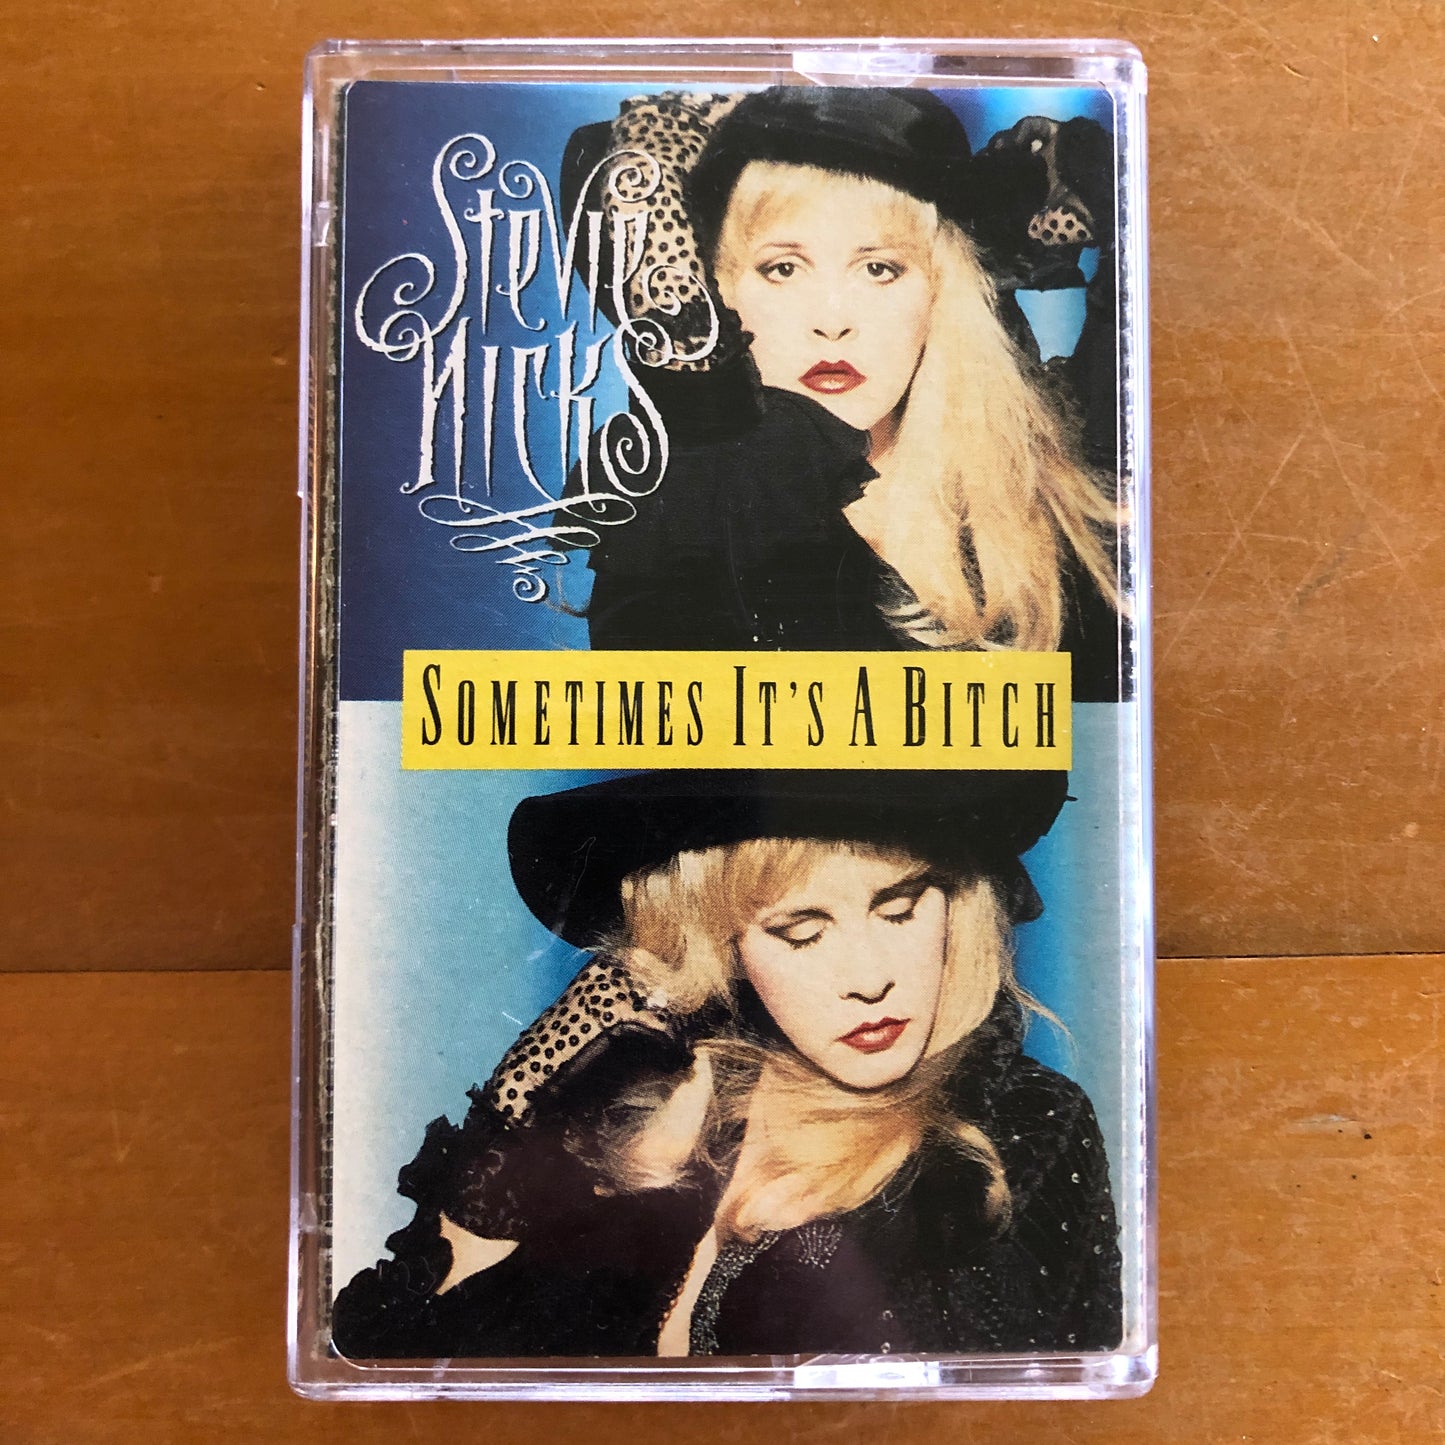 Stevie Nicks - Sometimes It's A Bitch (cassette)